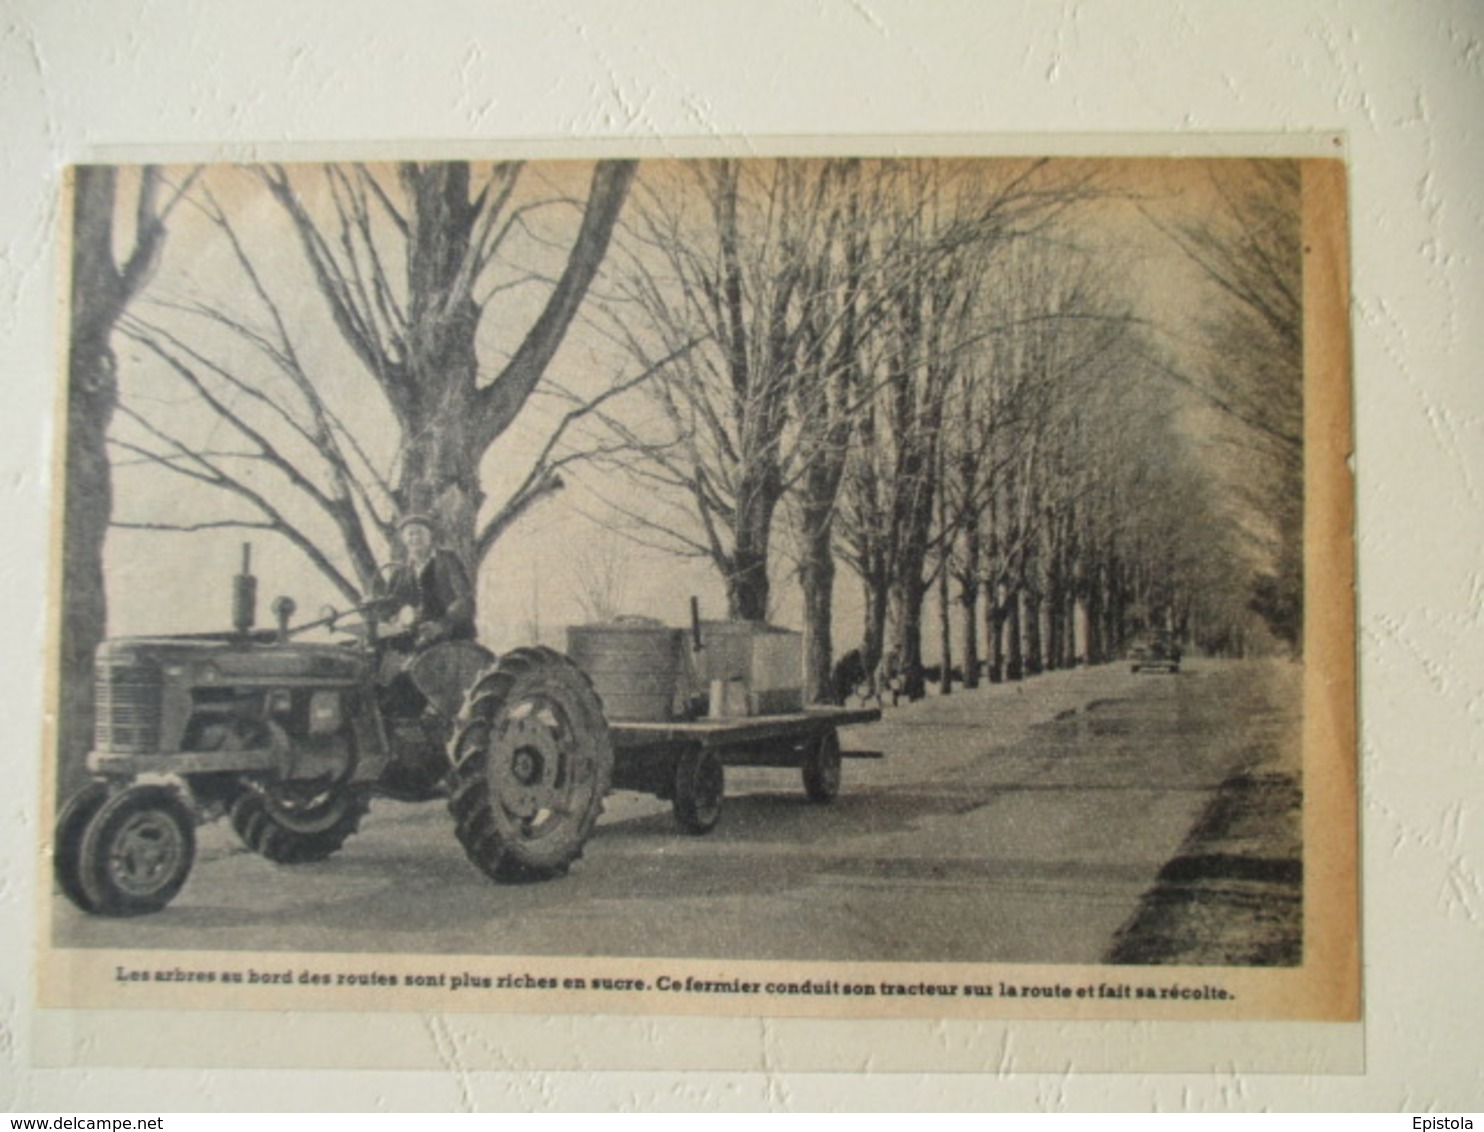 New Hampshire USA -  Tracteur Culture Sirop D'érable (Mapple Juice Culture Farmall Tractor)  - Coupure De Presse De 1950 - Tracteurs